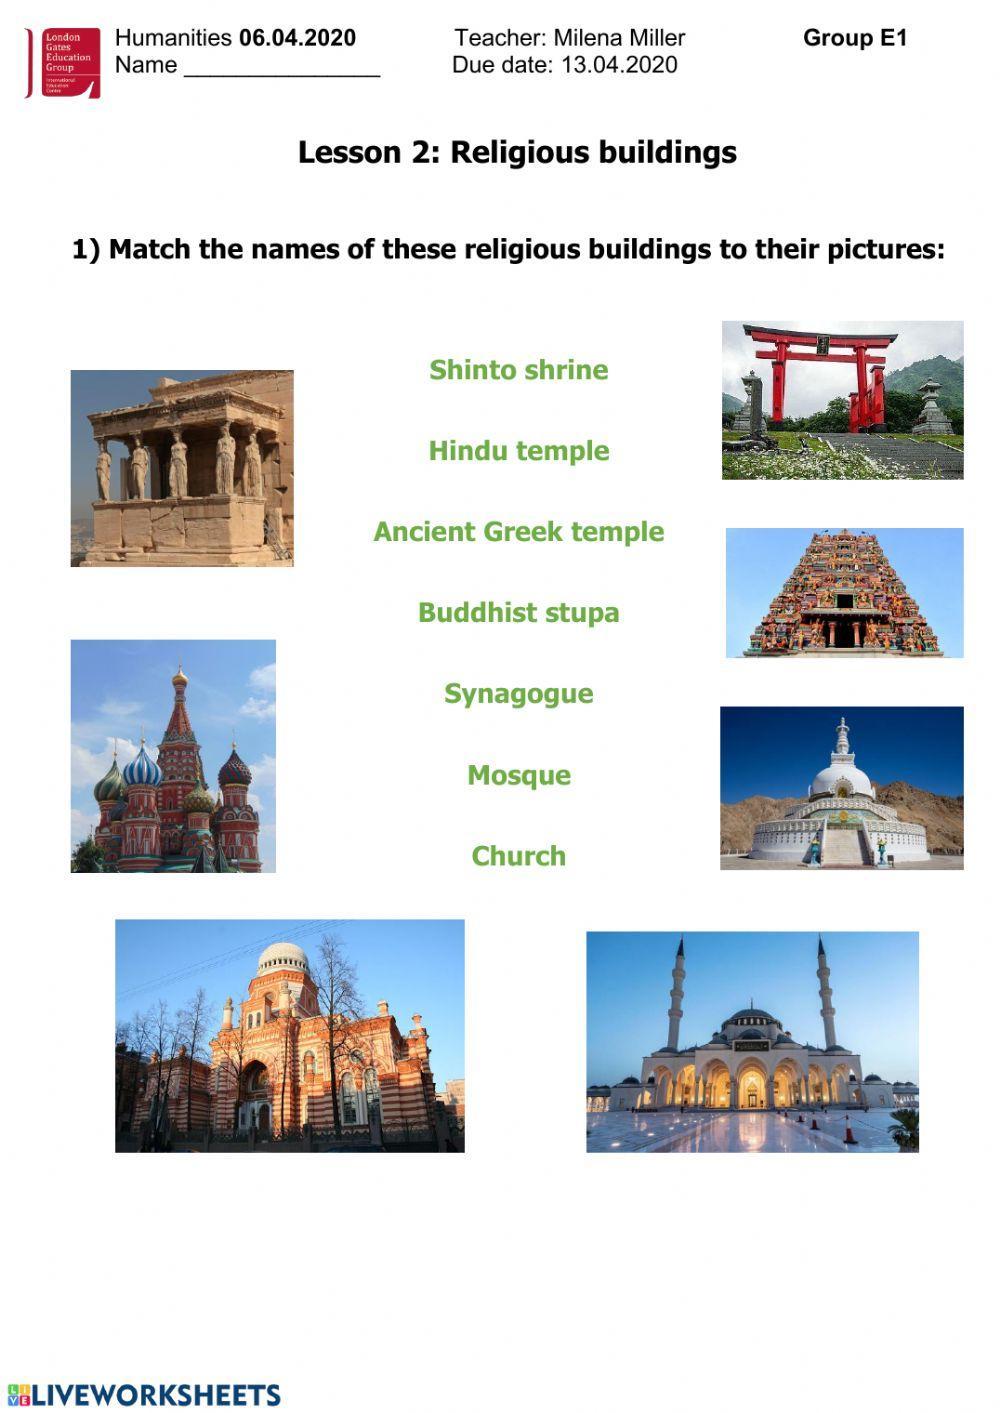 Religious buildings